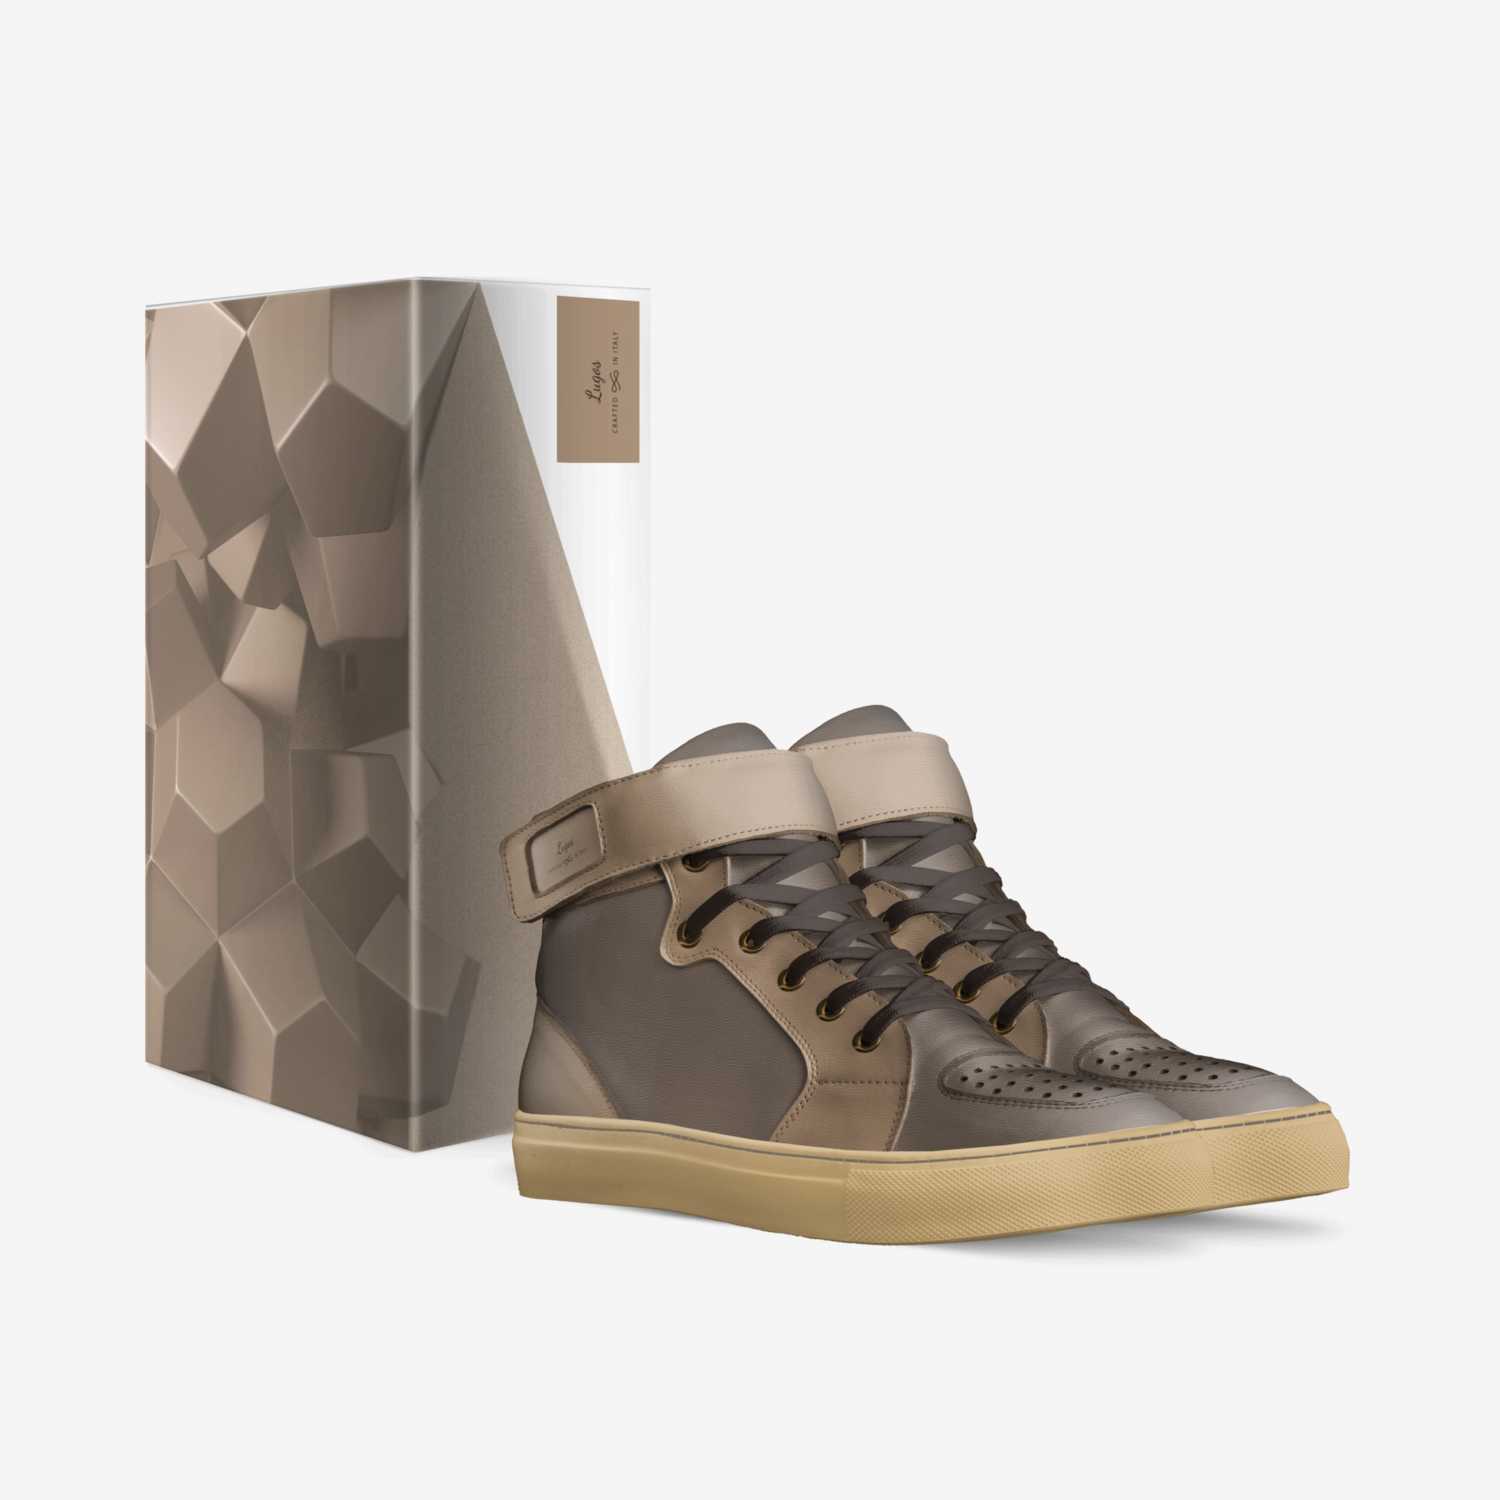 jameslugos custom made in Italy shoes by Jameslugo | Box view